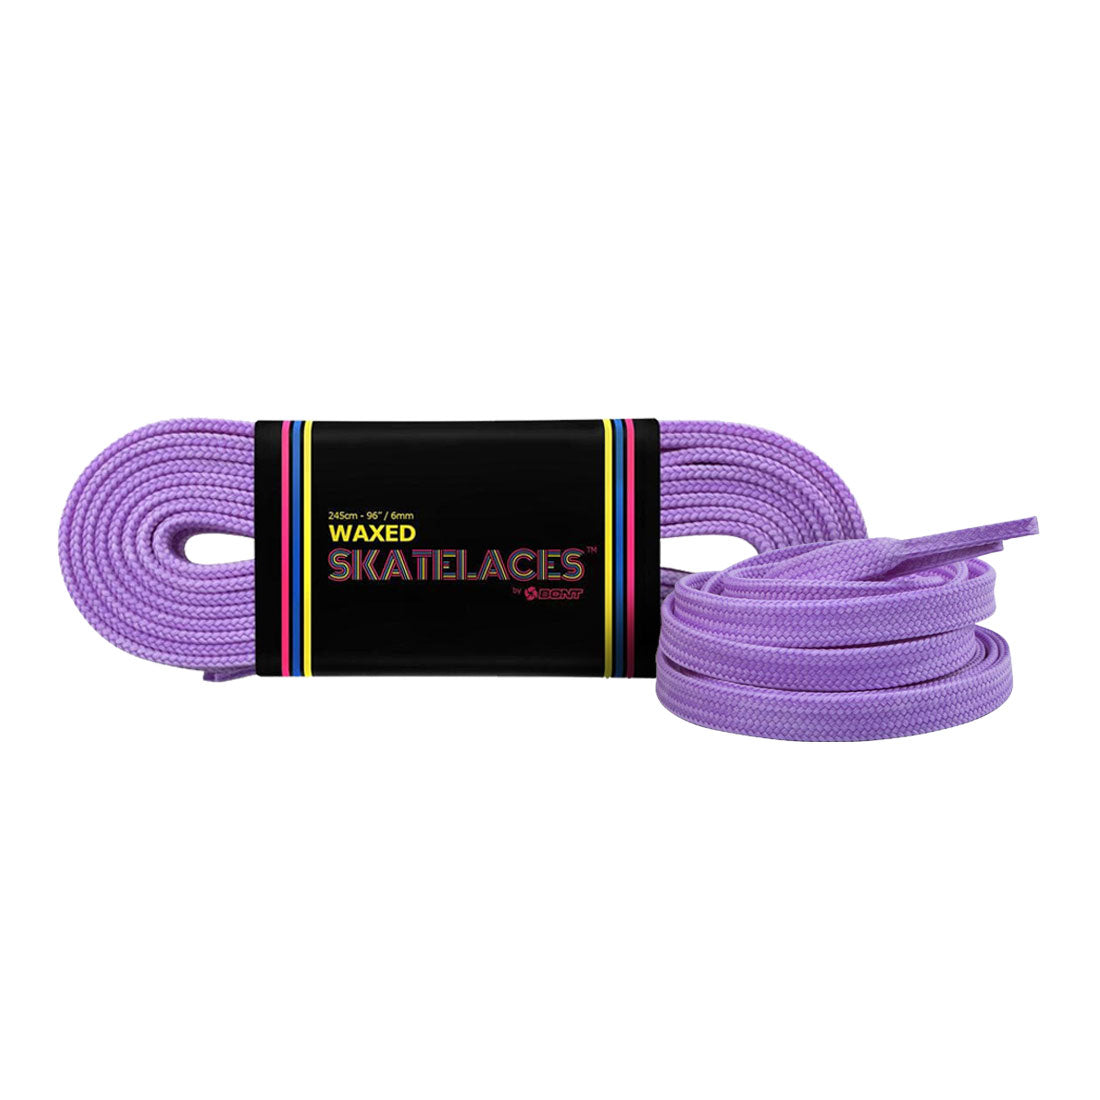 Bont Waxed 8mm Laces - 200cm/79in Amethyst Purple Laces